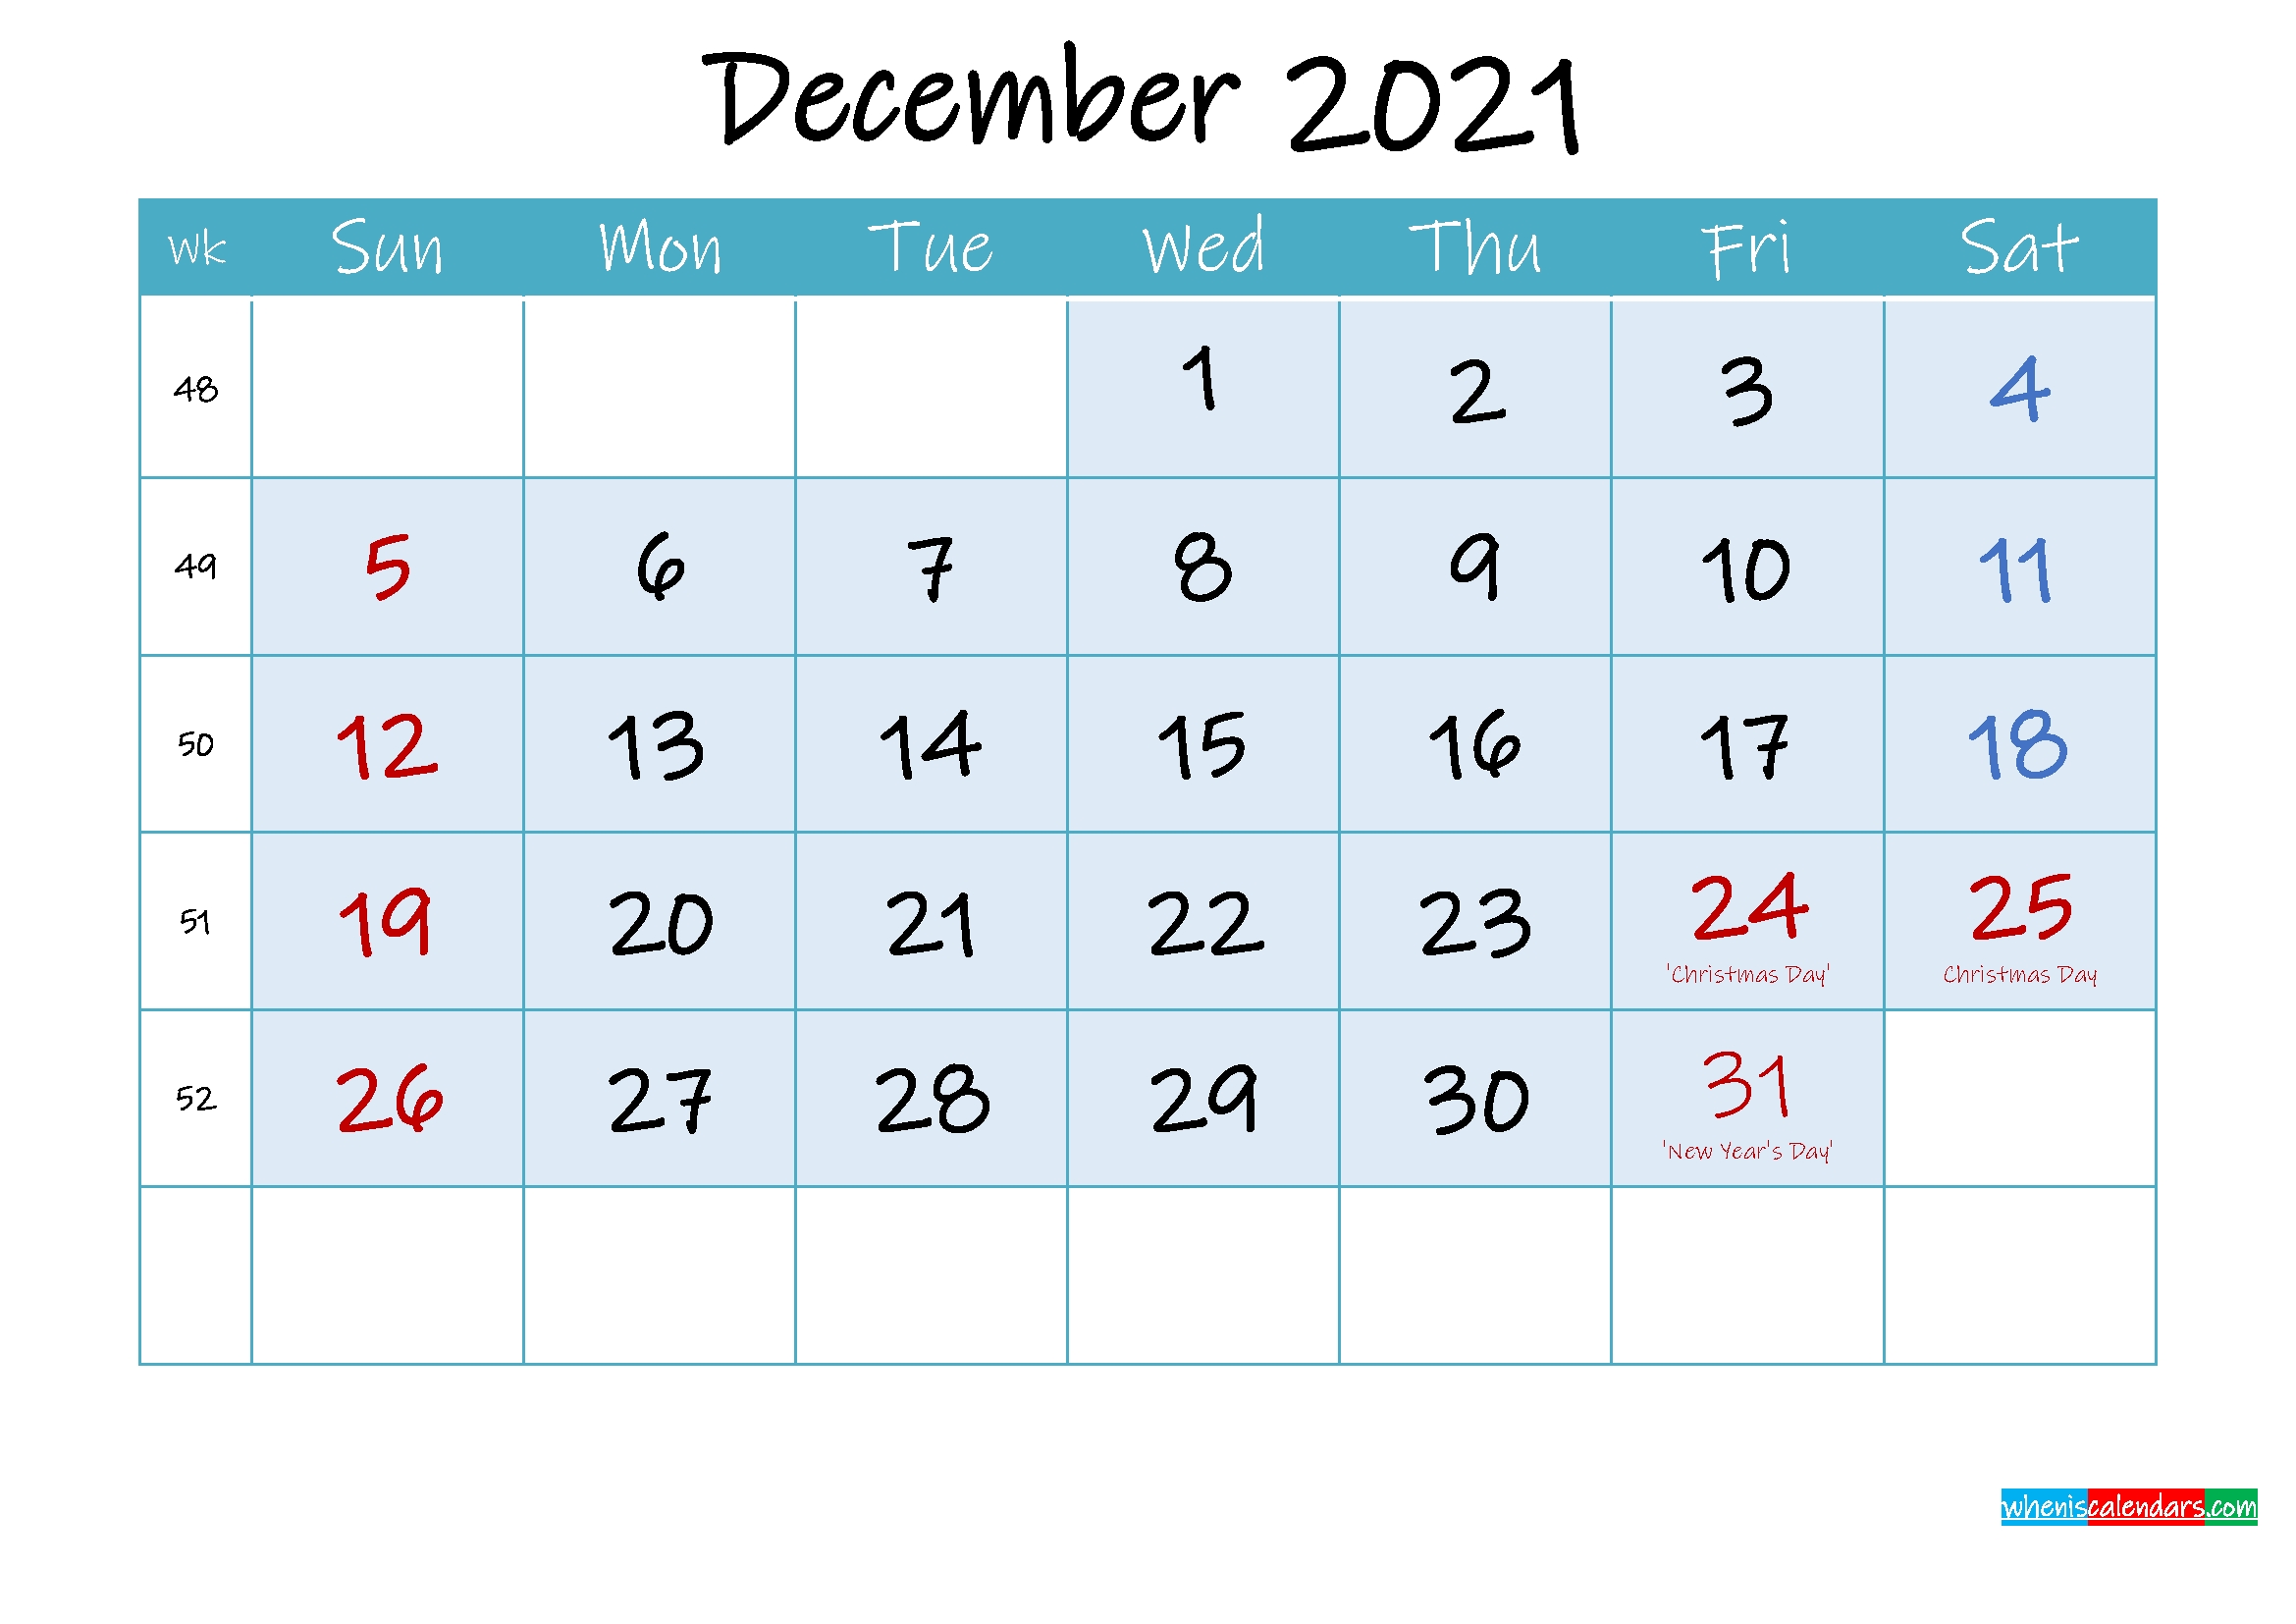 December 2021 Free Printable Calendar With Holidays - Template Ink21M156 Free Printable December 2021 Calendar With Holidays